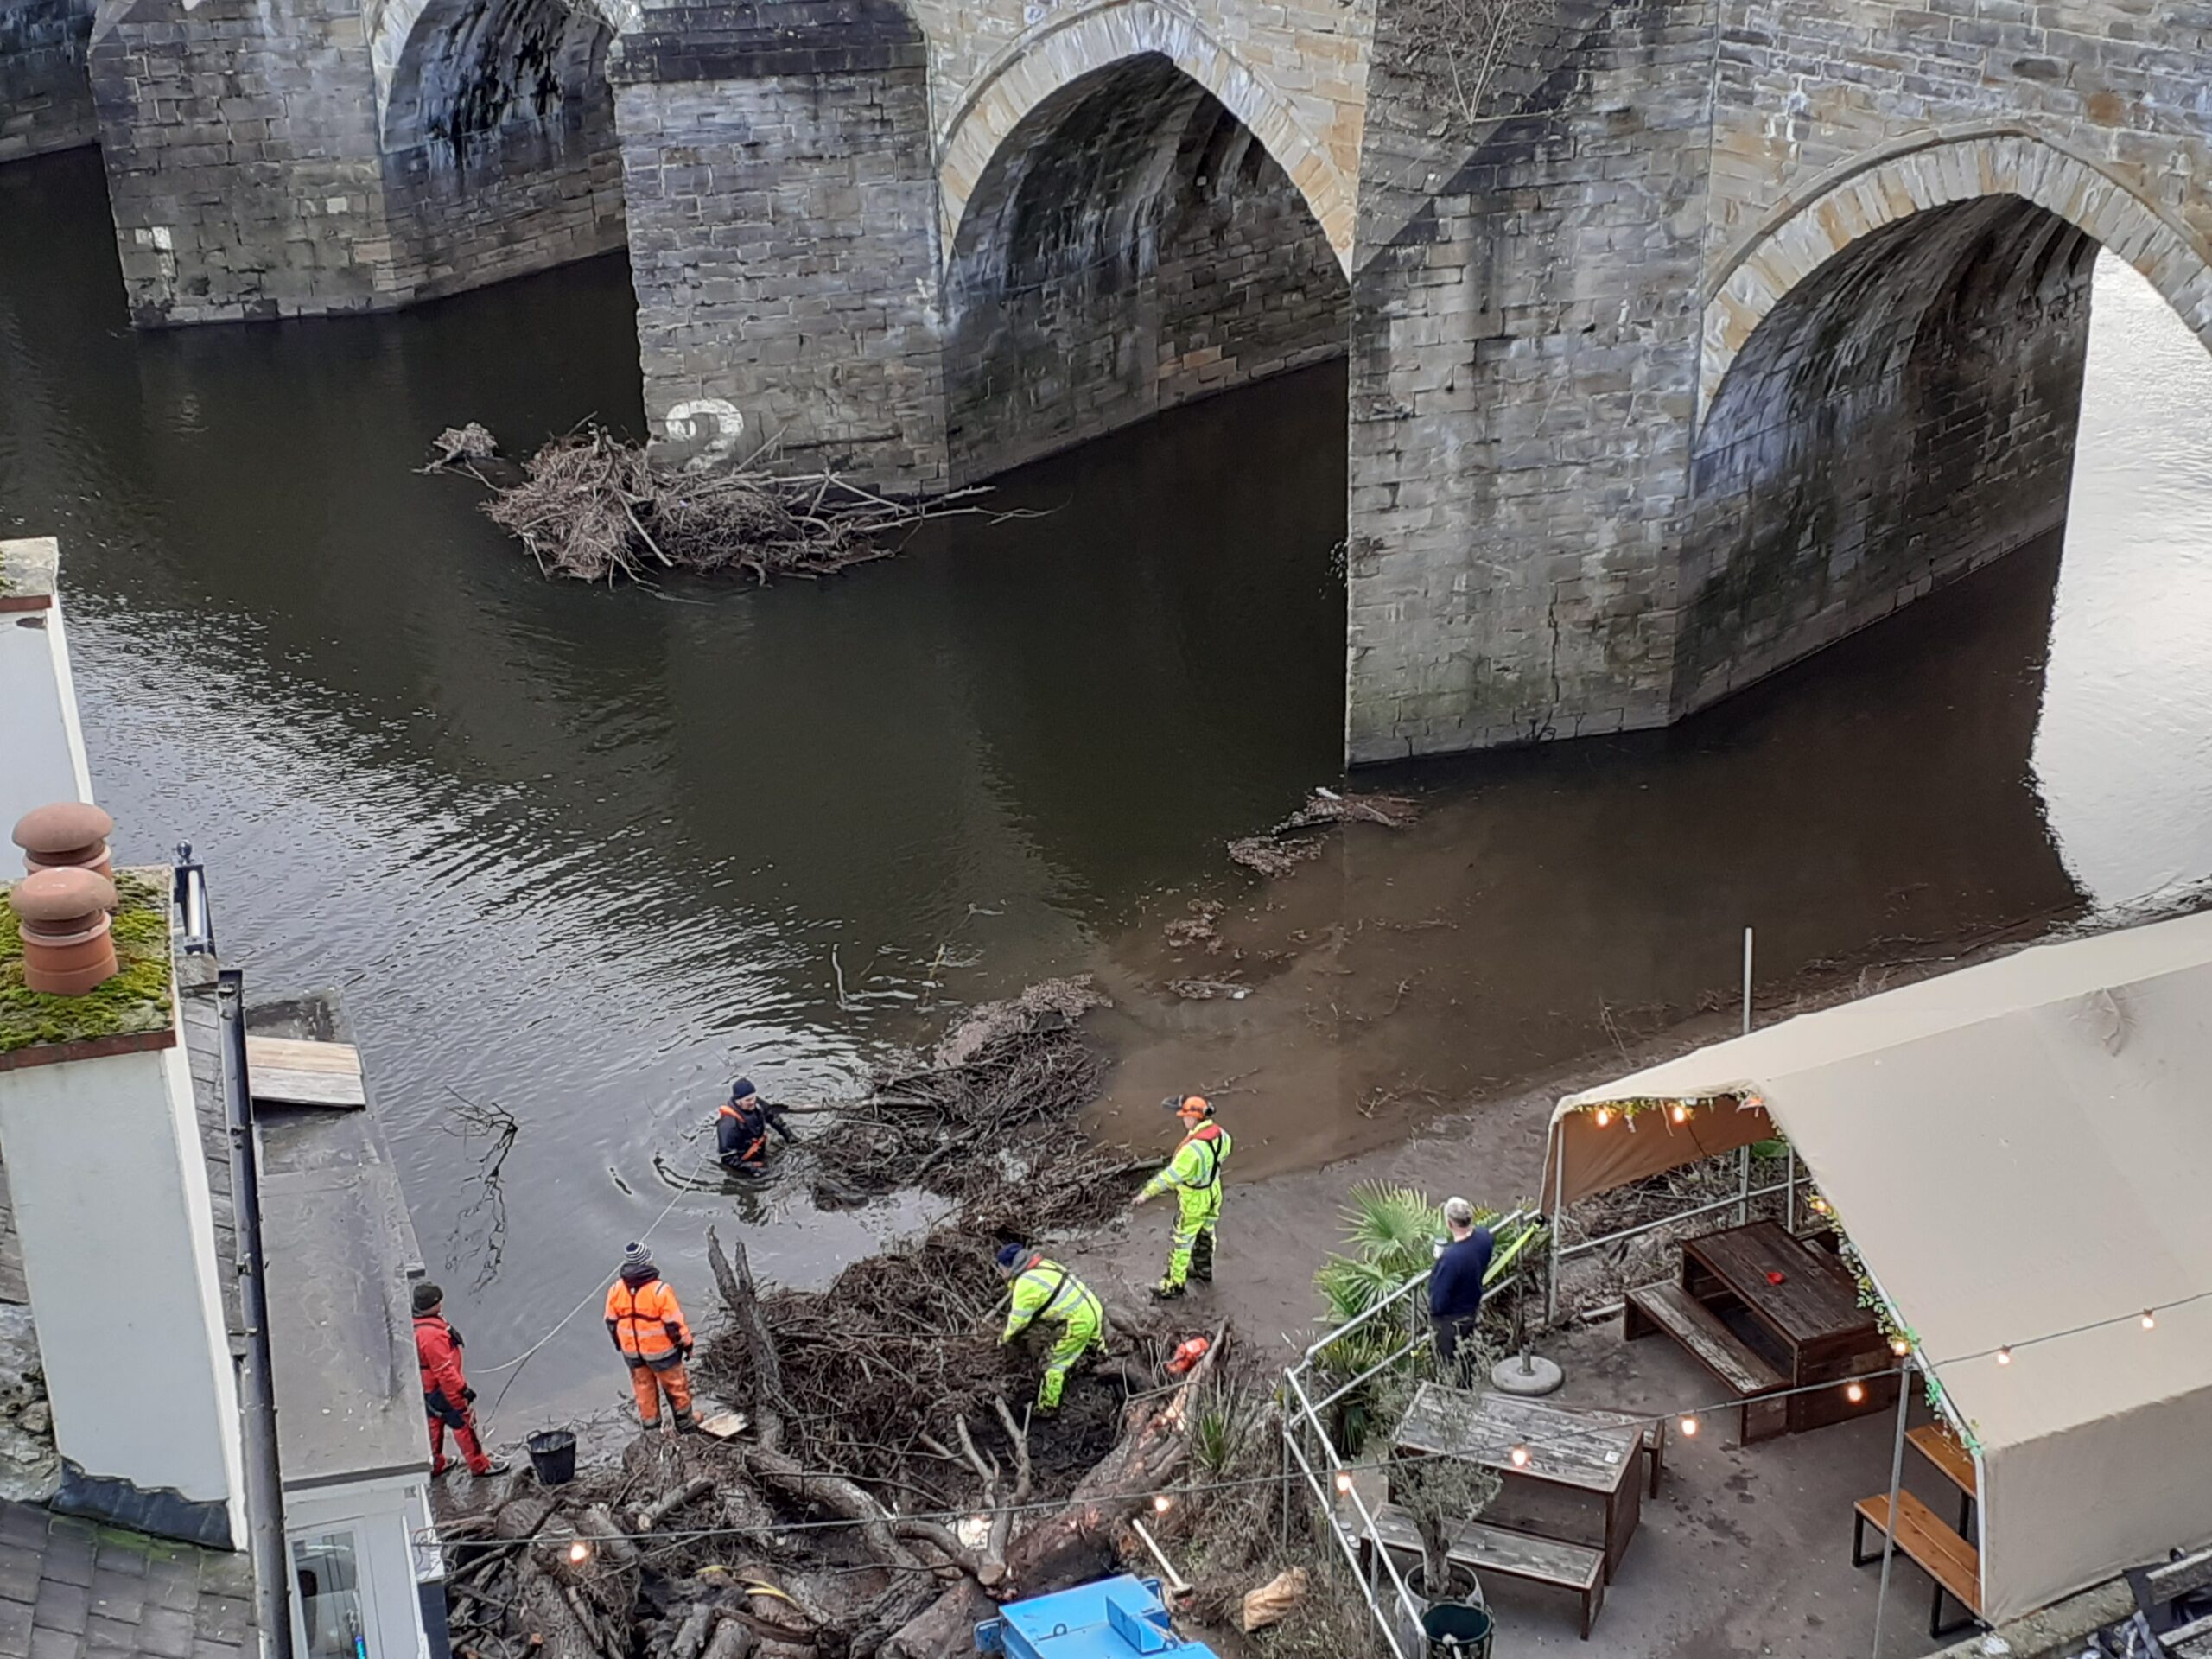 Removing debris from Elvet Bridge